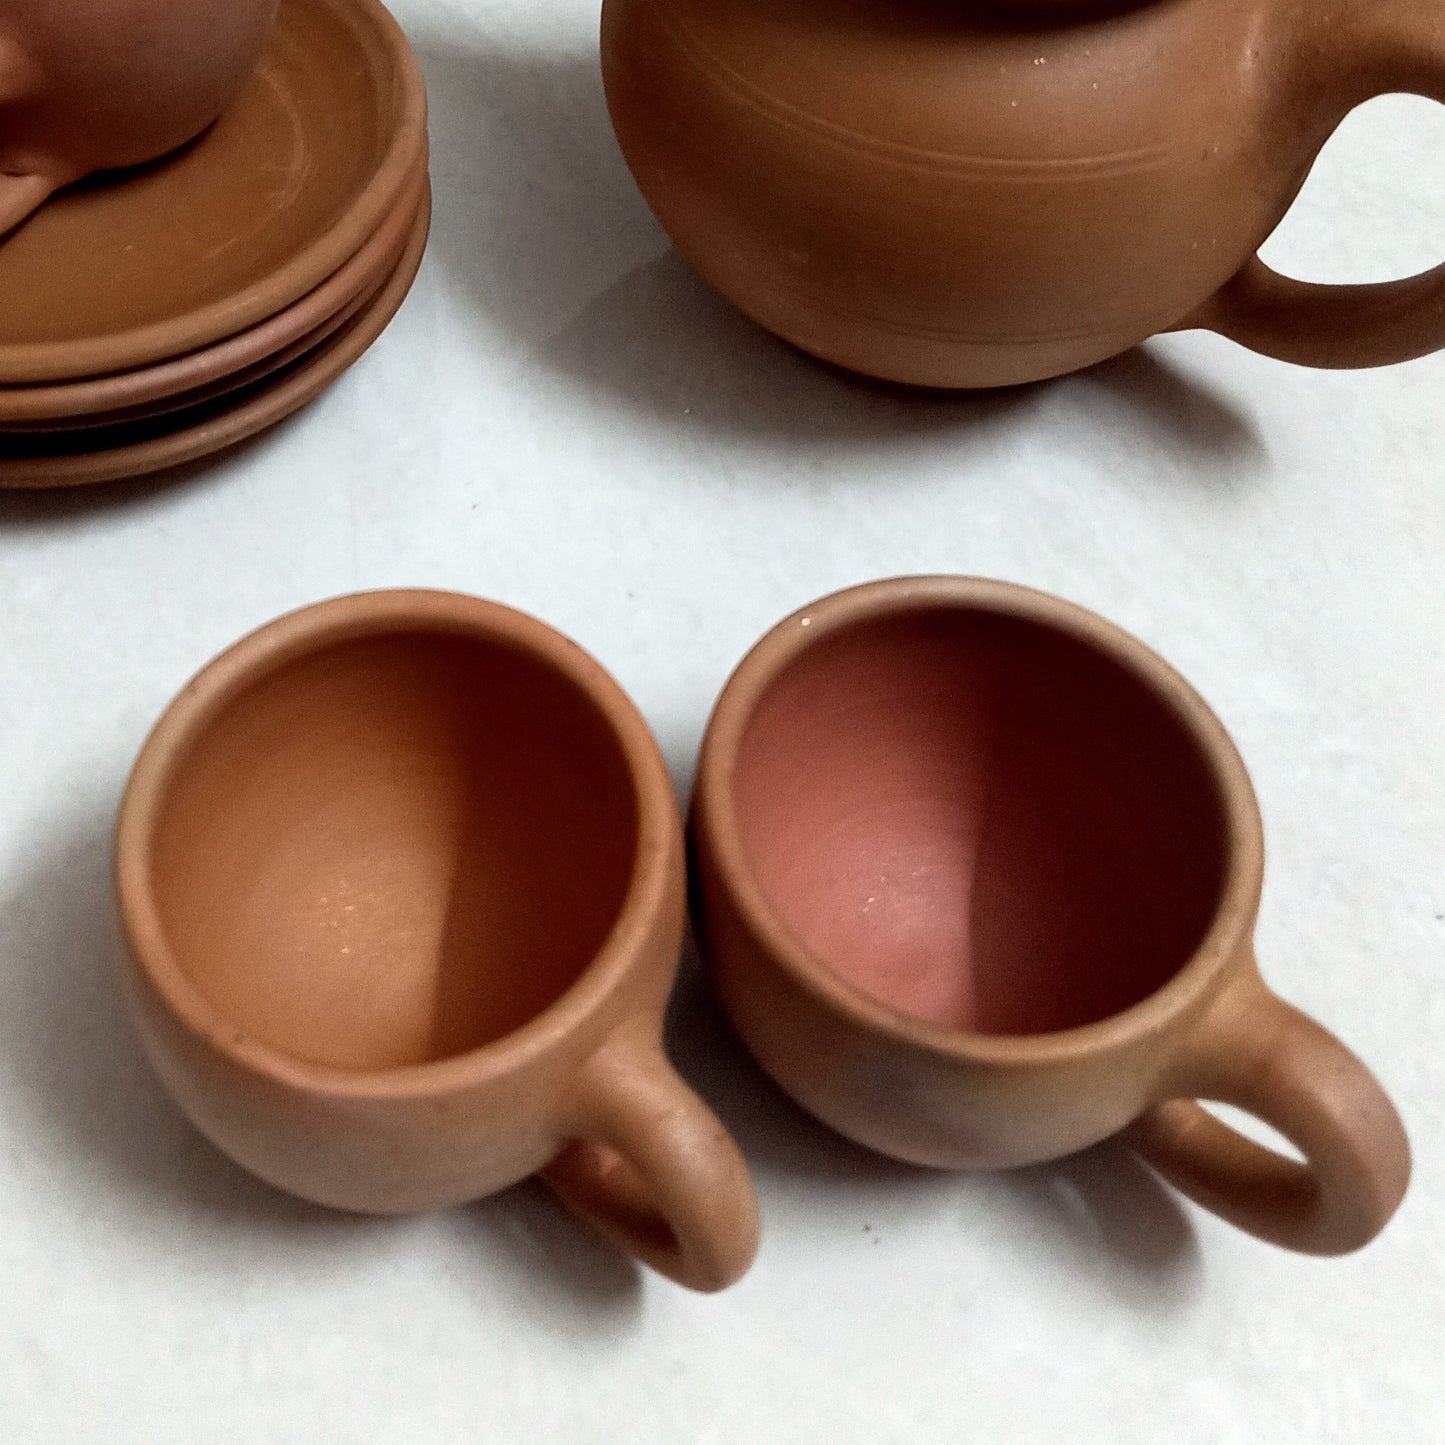 Nizamabad Clay Pottery Teaset For 2